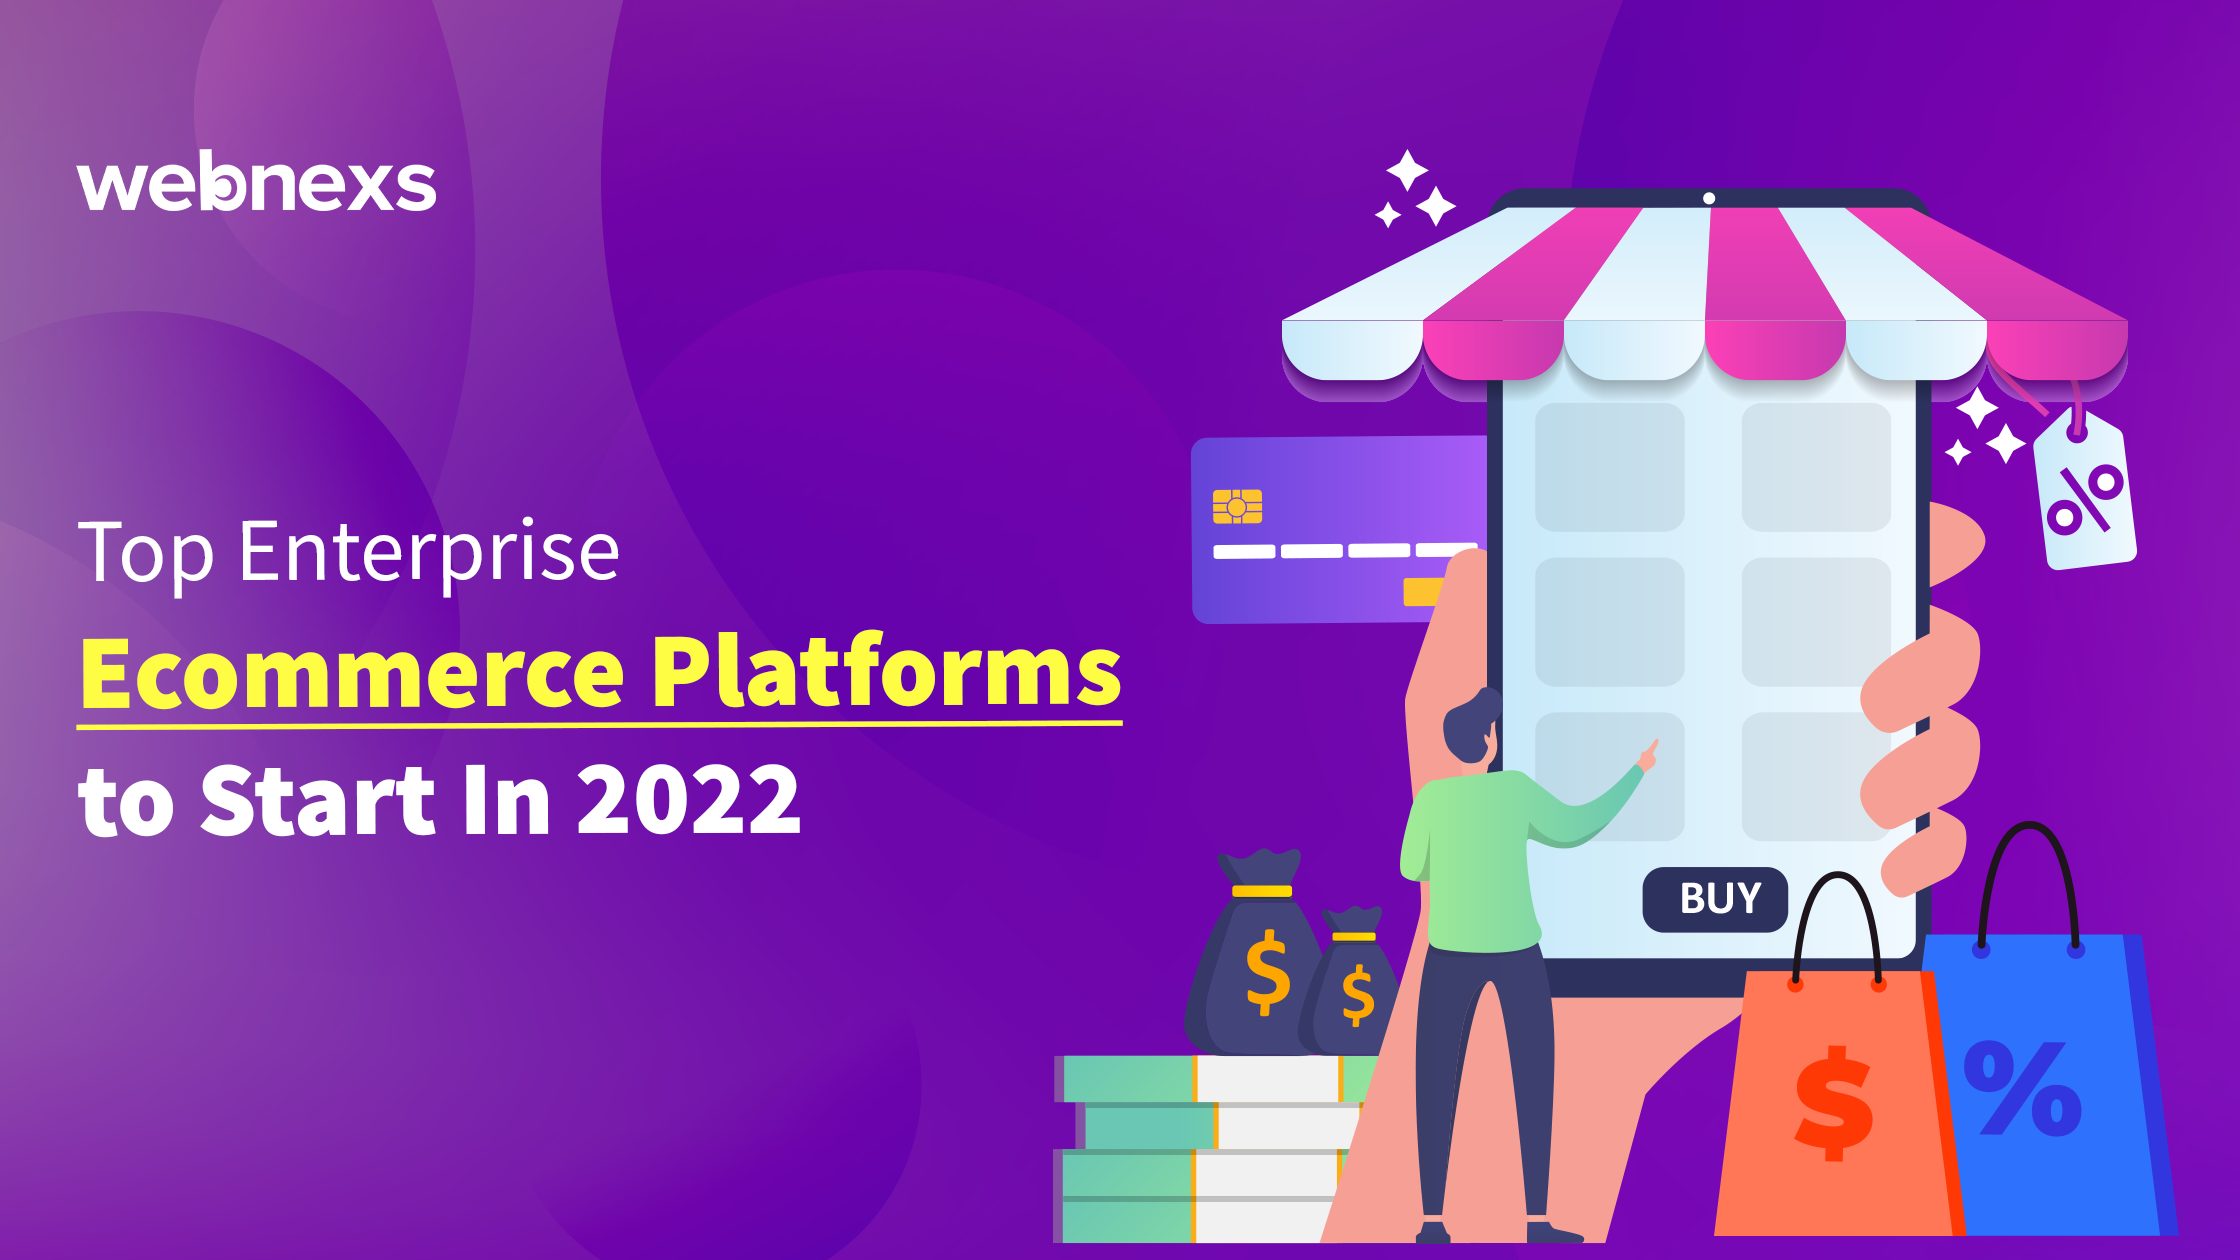 Top Enterprise Ecommerce Platforms to Start In 2022